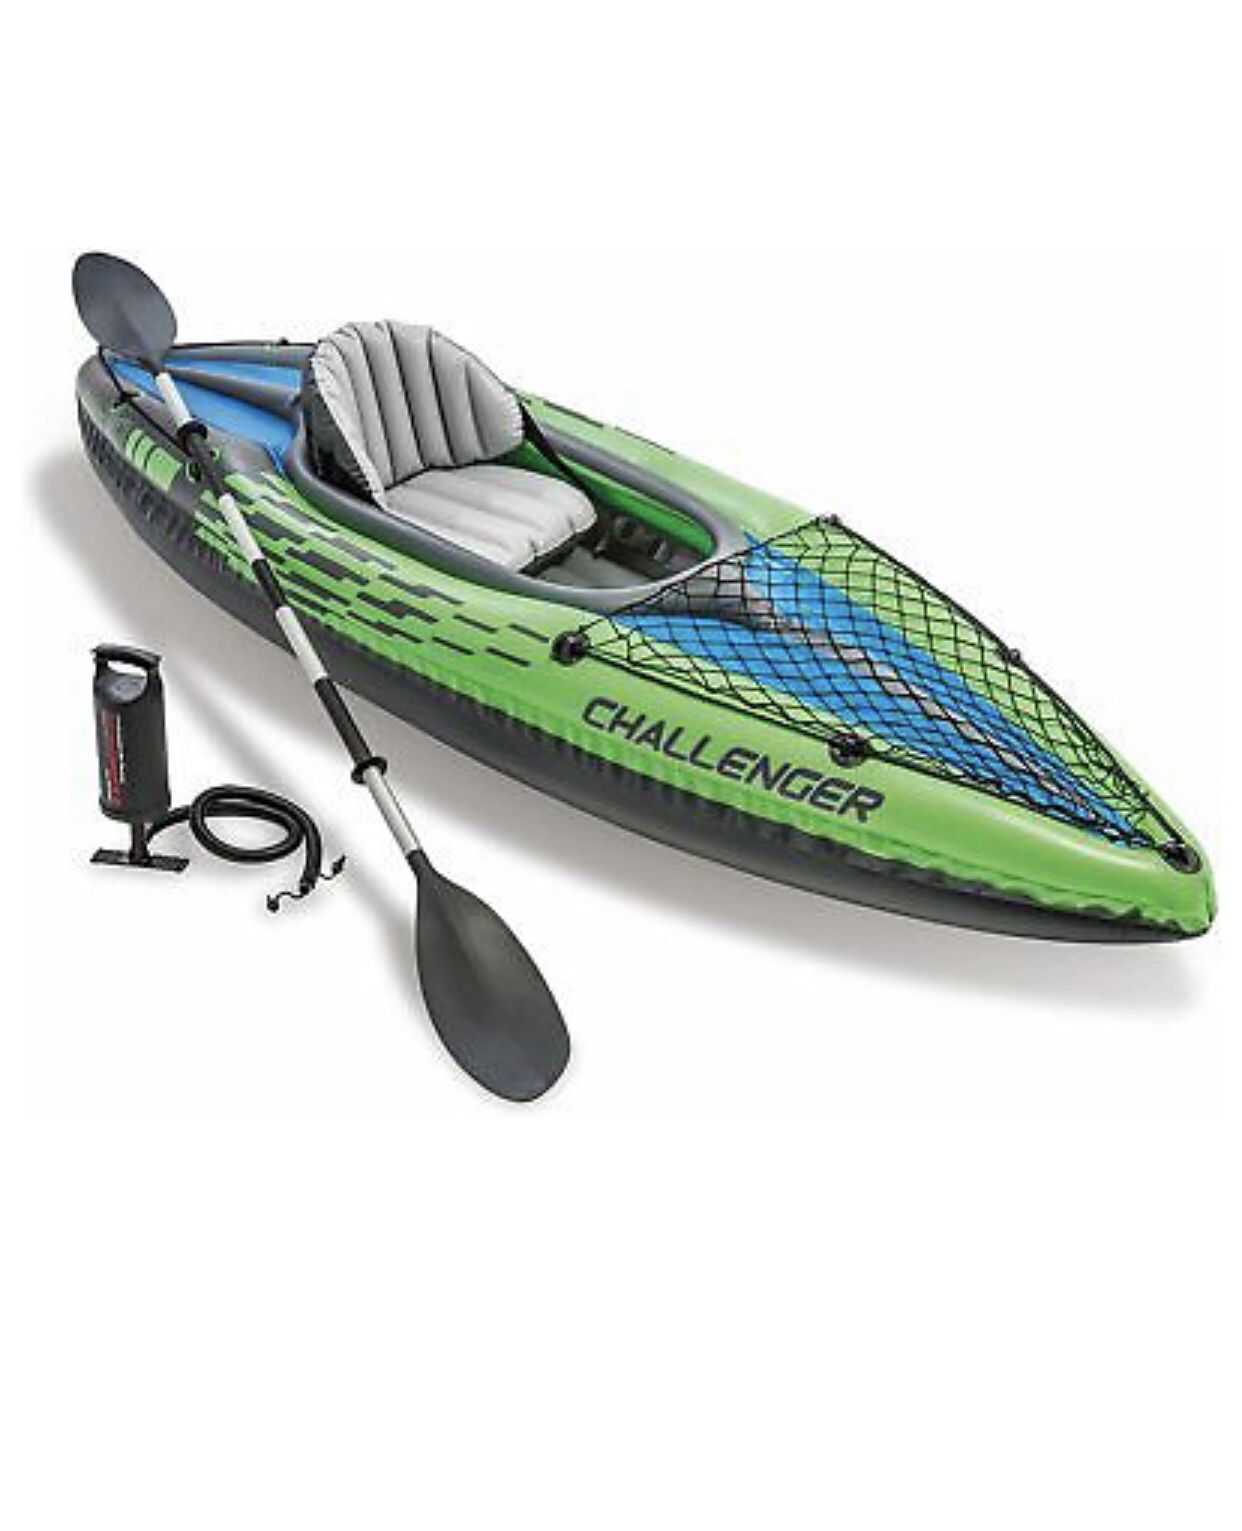 Intex Challenger Kayak Inflatable Set with Aluminum Oars K1 Kayak Brand New